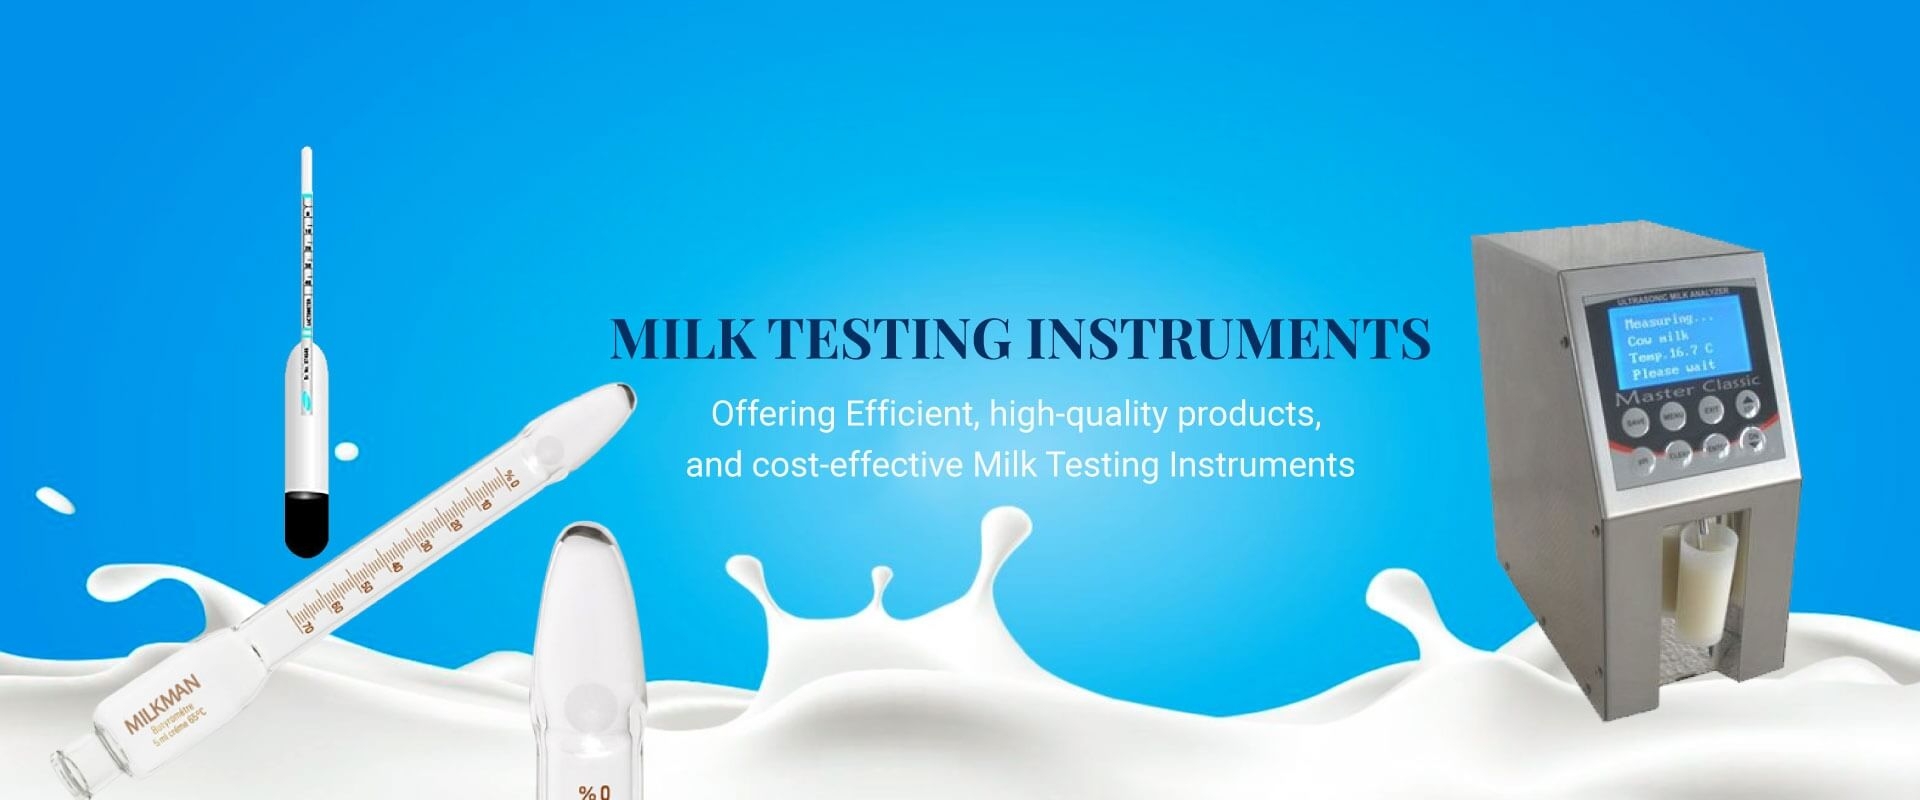 Milk Testing Instruments in Philippines